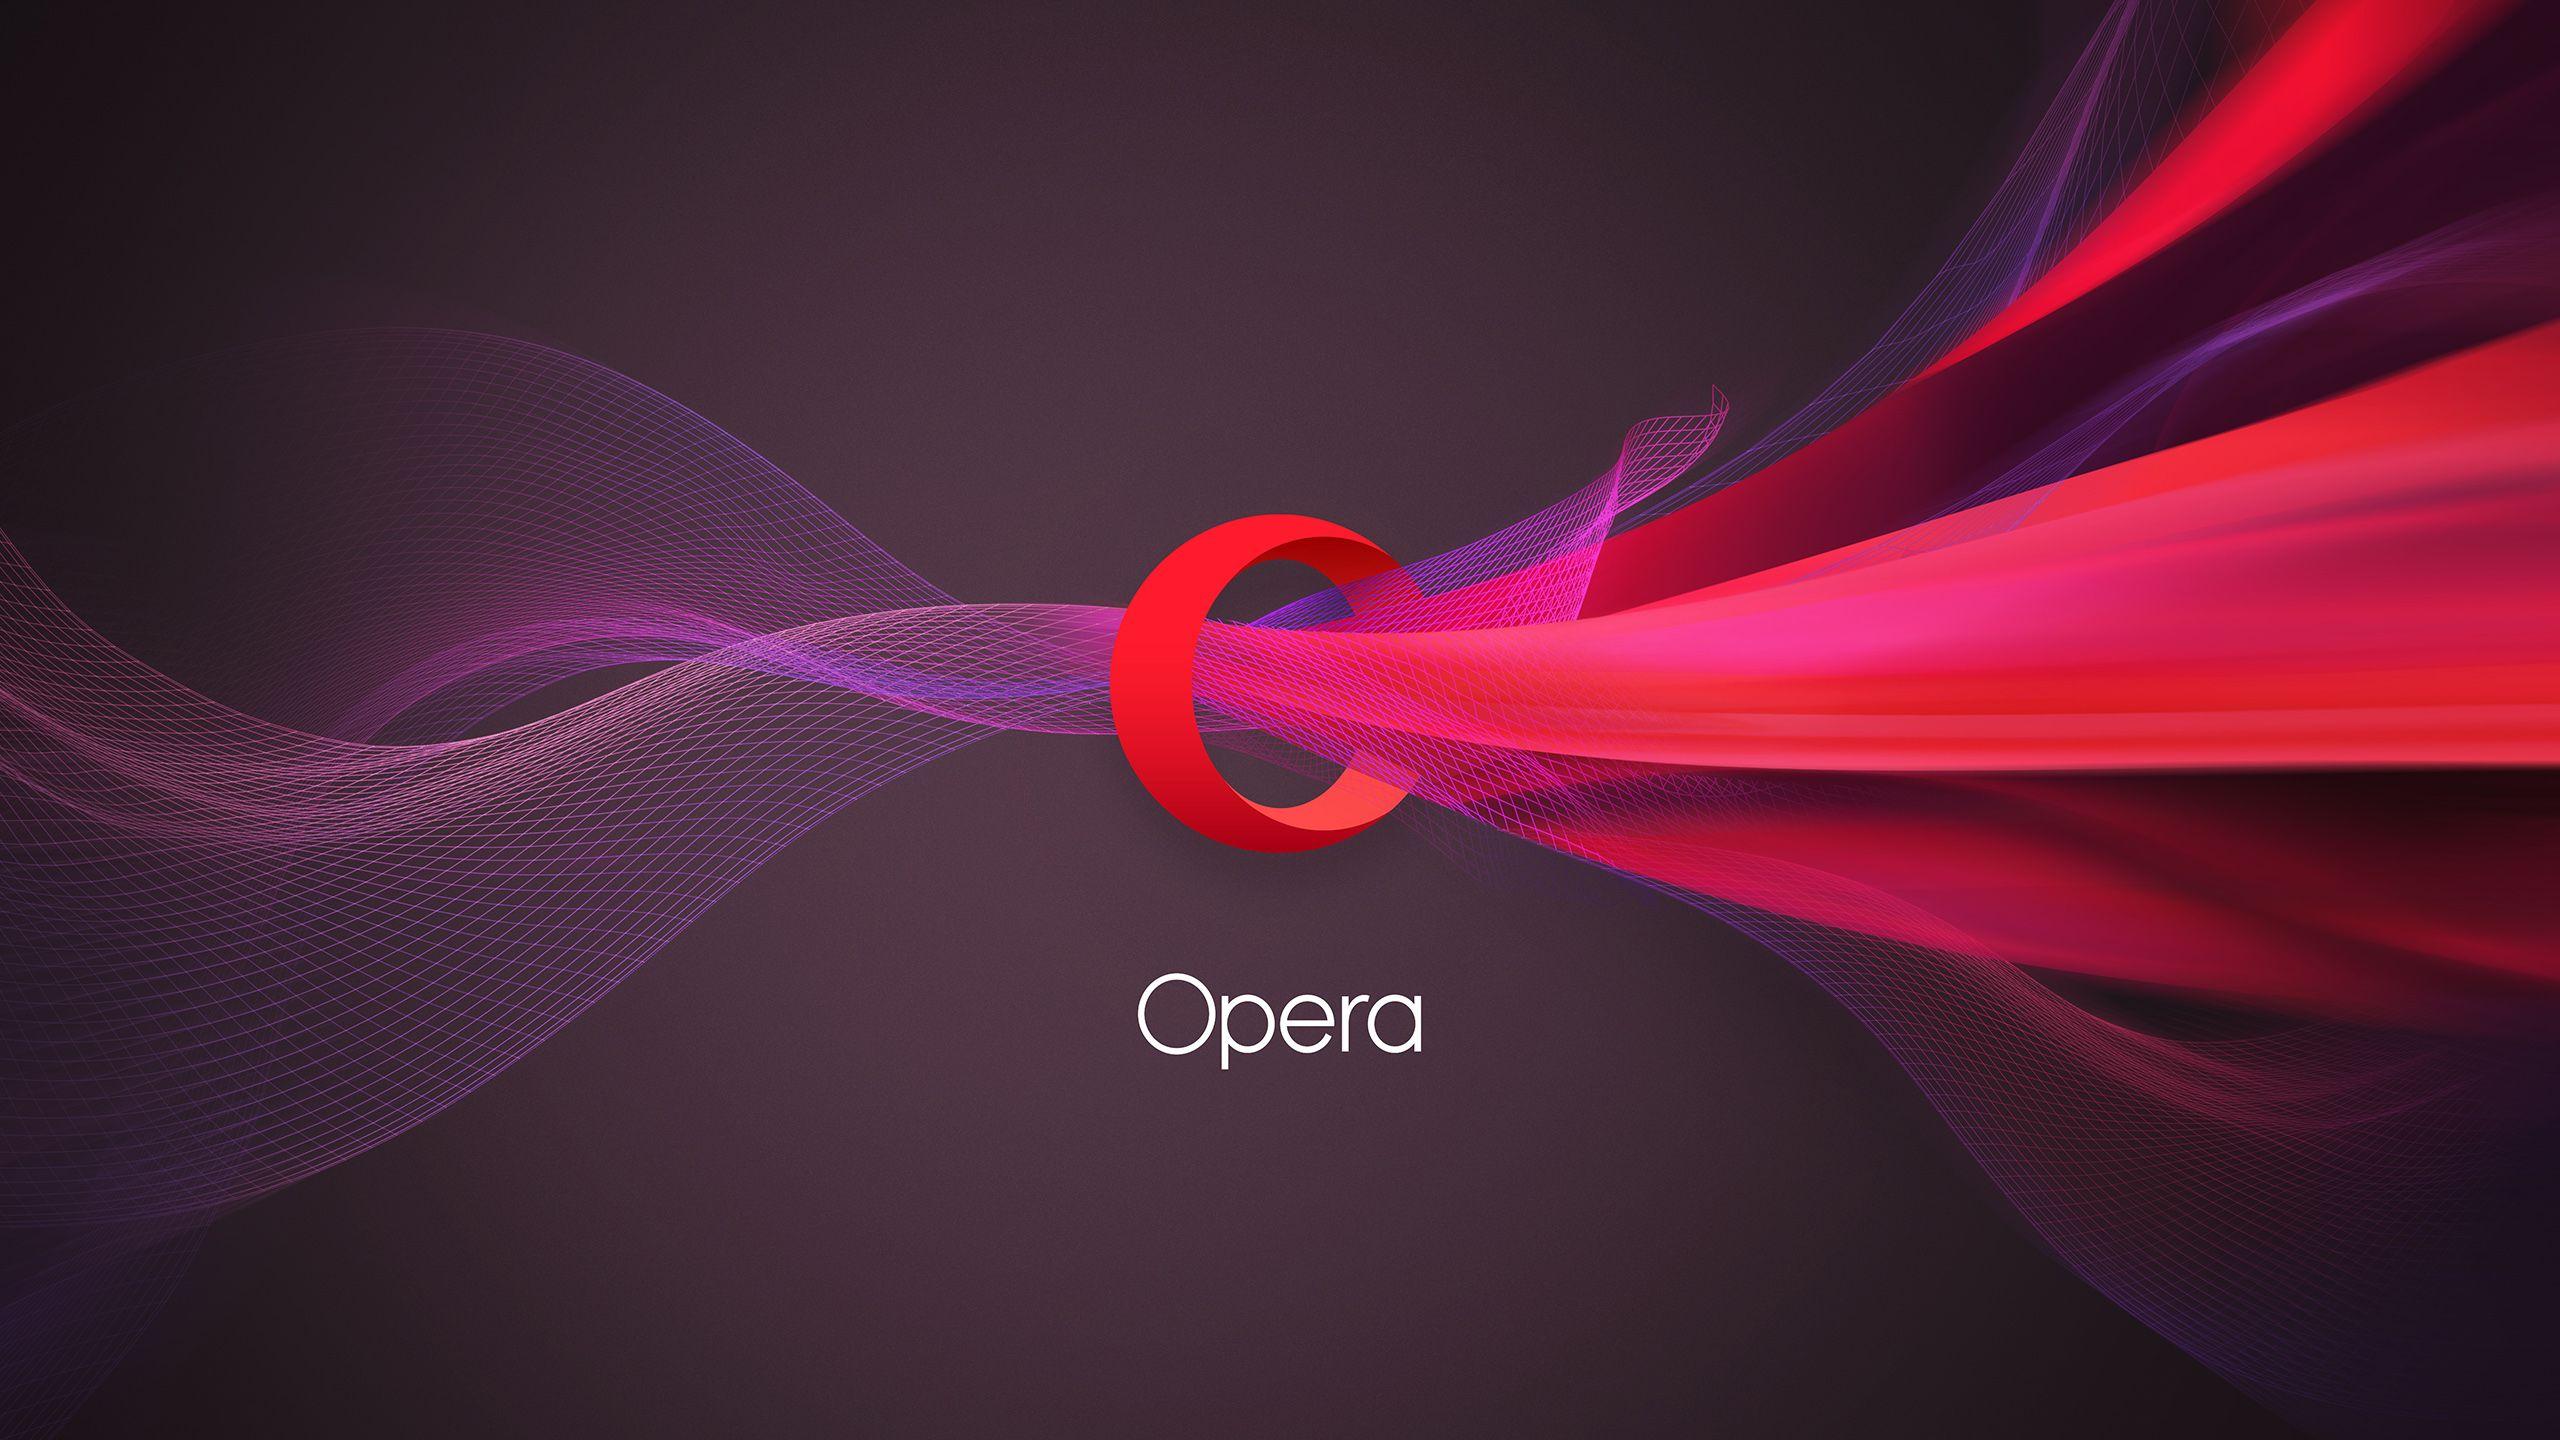 Red and Purple Logo - Meet Opera's new brand identity